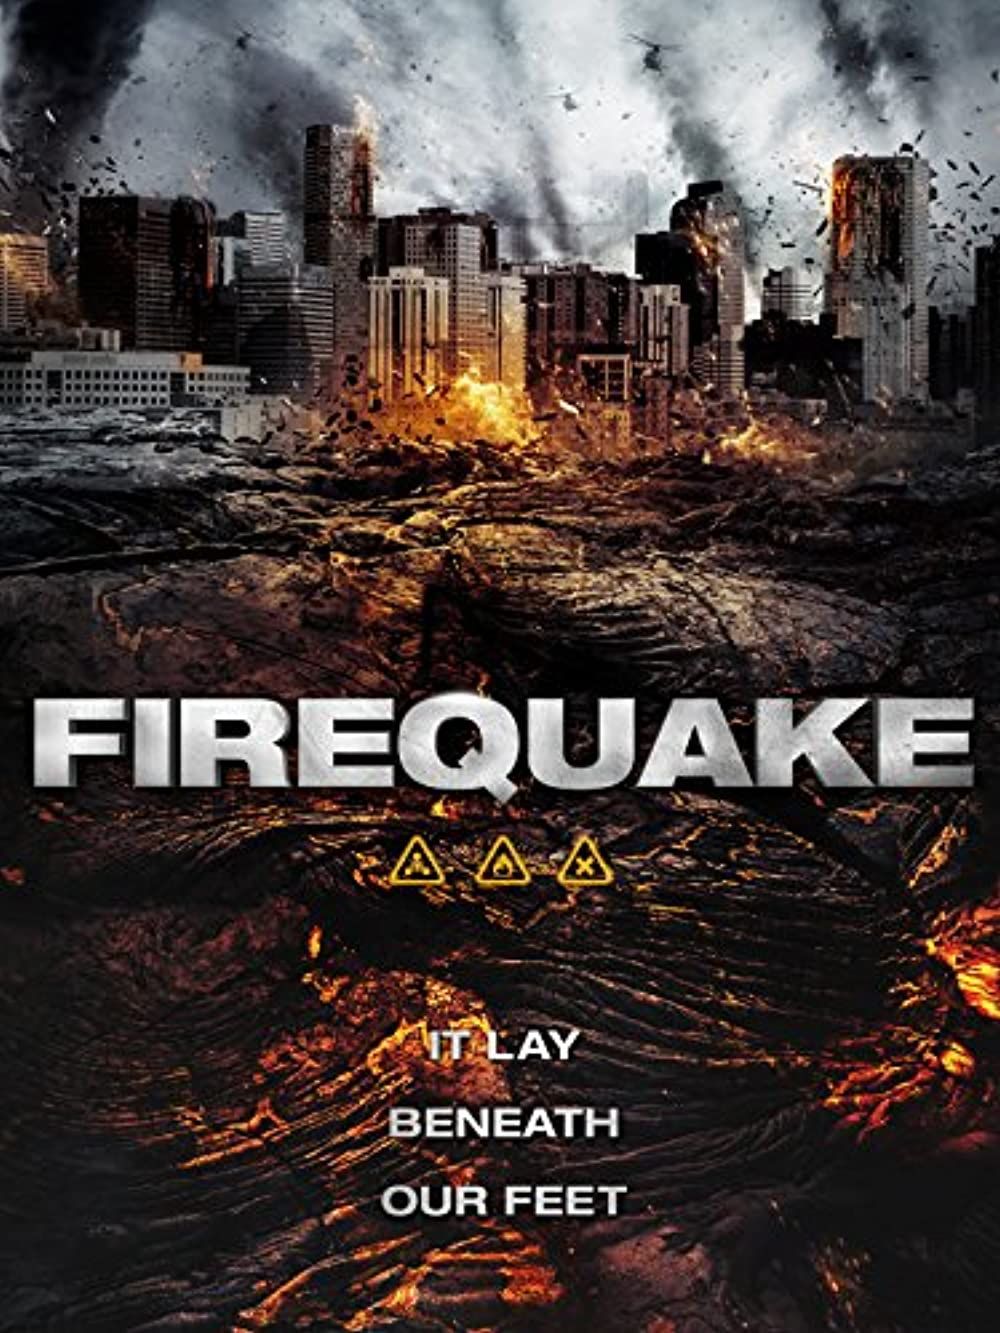 Firequake (2014) Hindi Dubbed BluRay download full movie